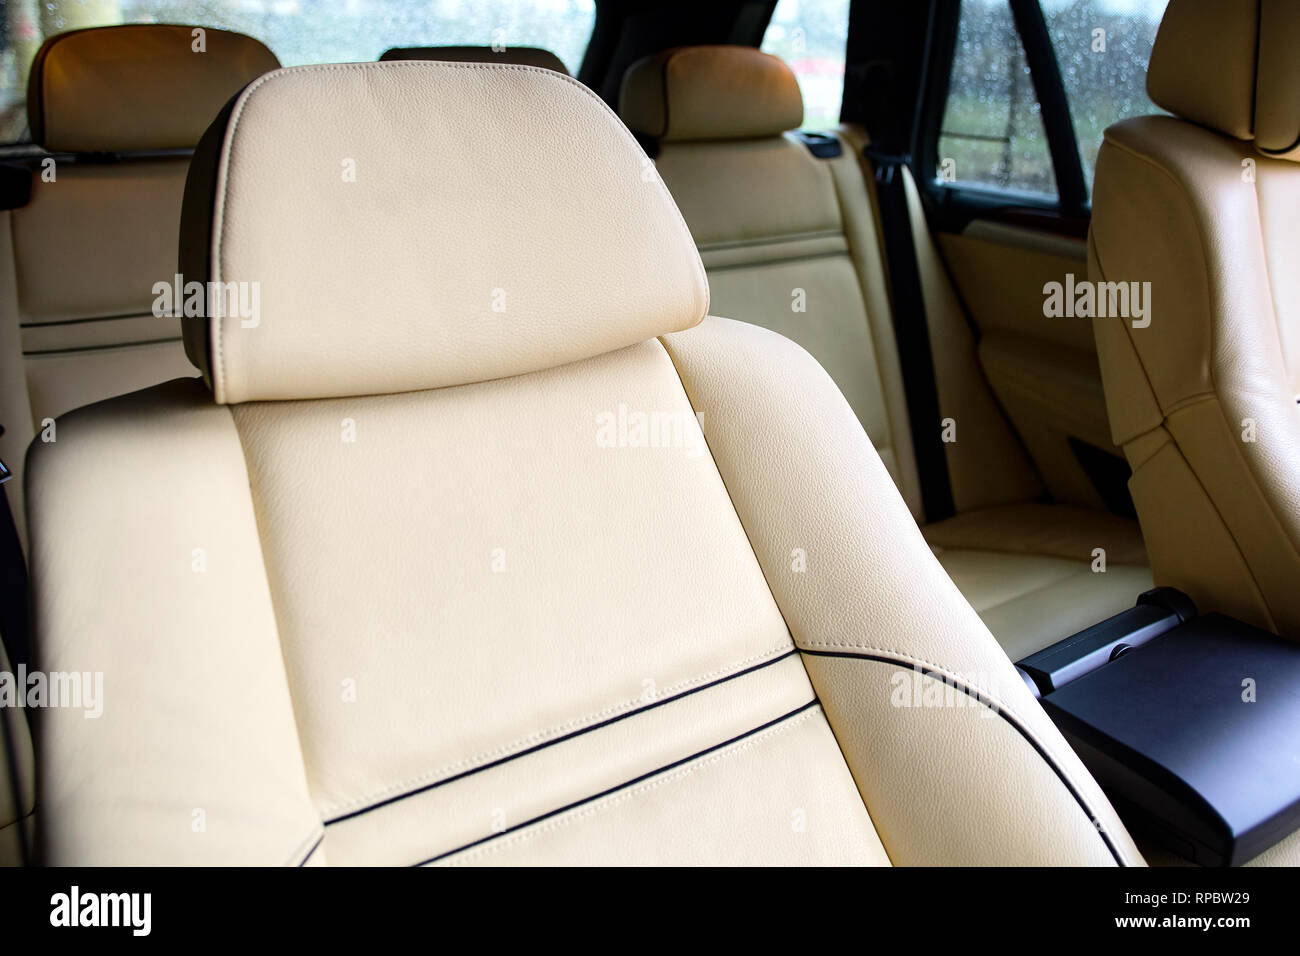 https://c8.alamy.com/compde/rpbw29/luxus-auto-innen-innenraum-der-prestige-modernes-auto-komfortable-ledersitze-beige-leder-cockpit-genaht-rpbw29.jpg